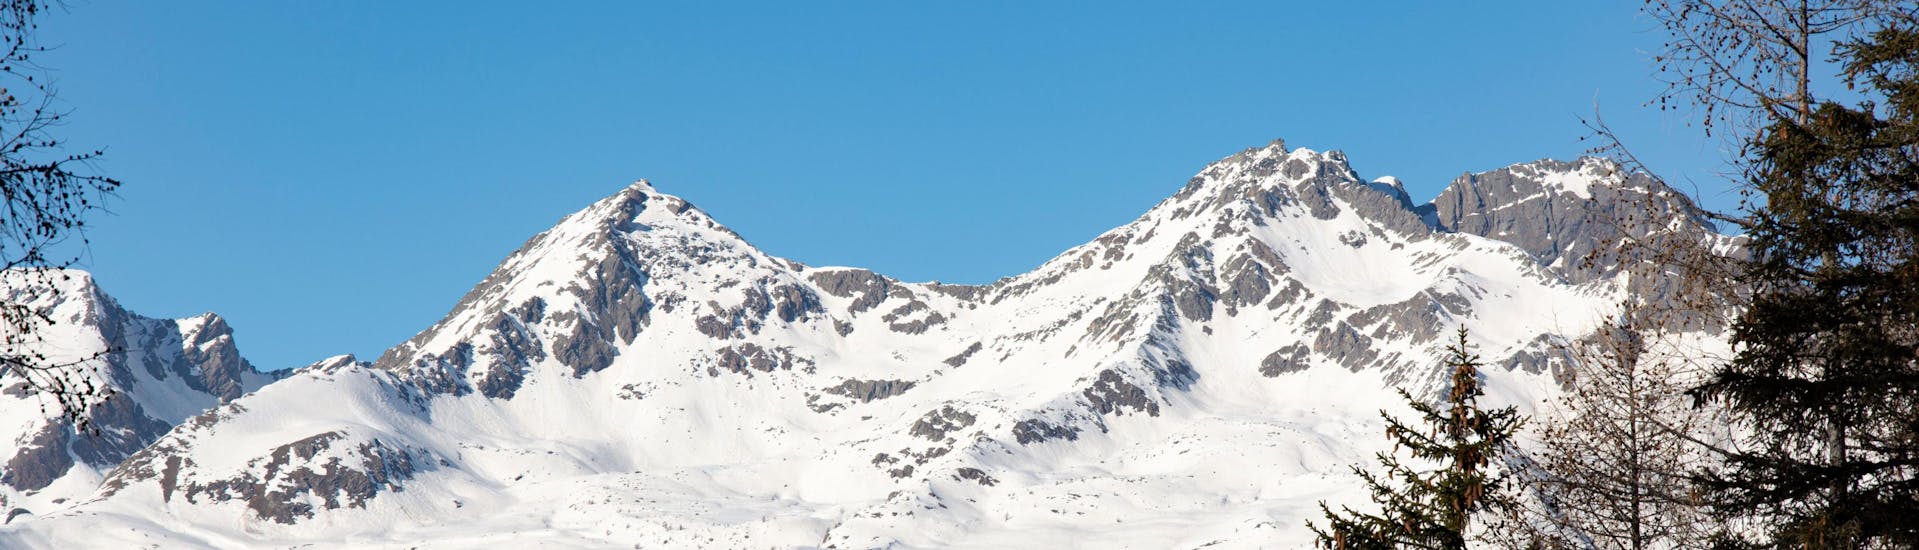 Paisaje invernal cerca de Daolasa - Commezzadura donde se pueden reservar clases de esquí.